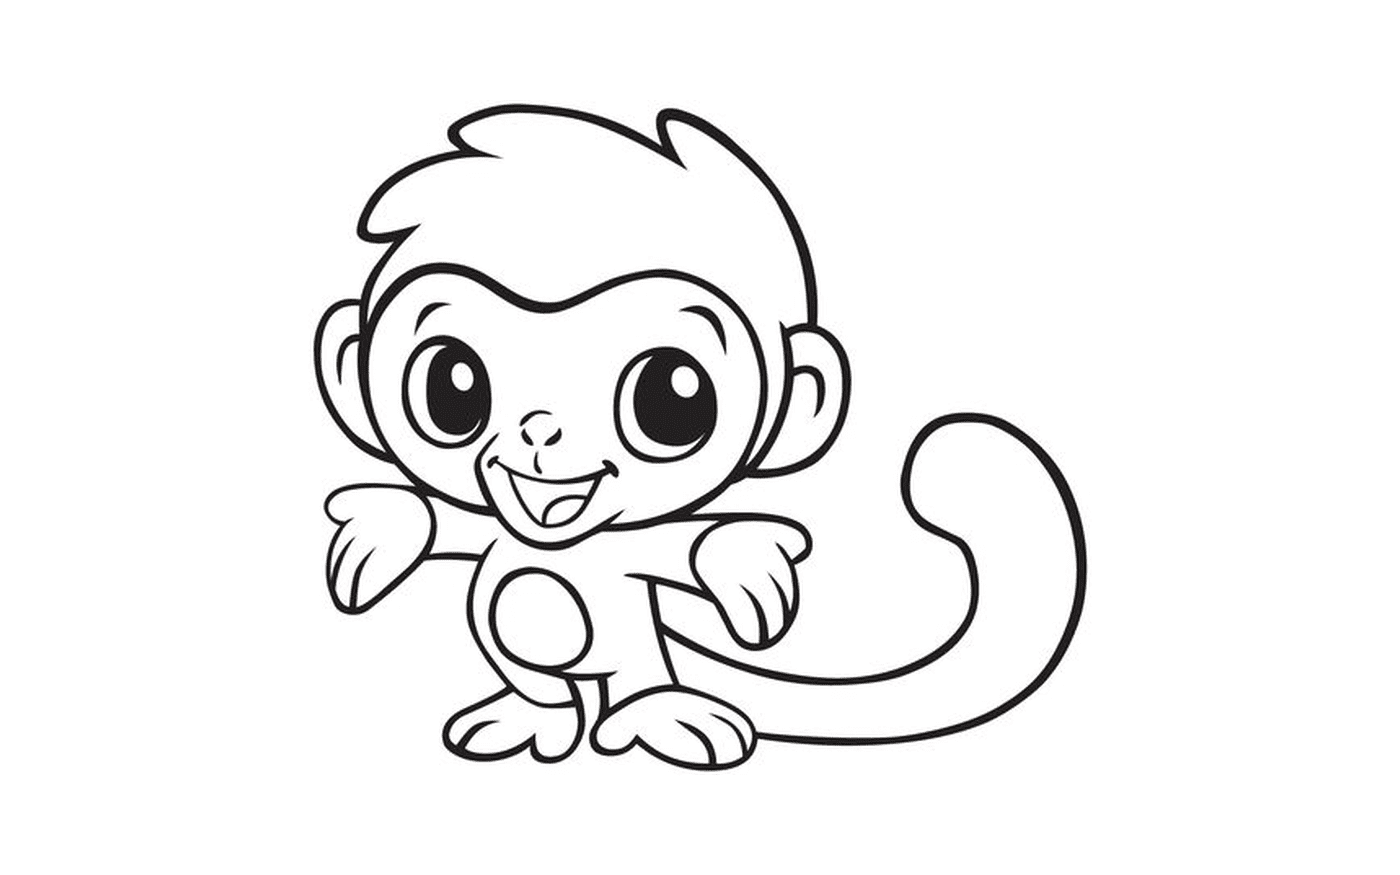  A cute monkey 